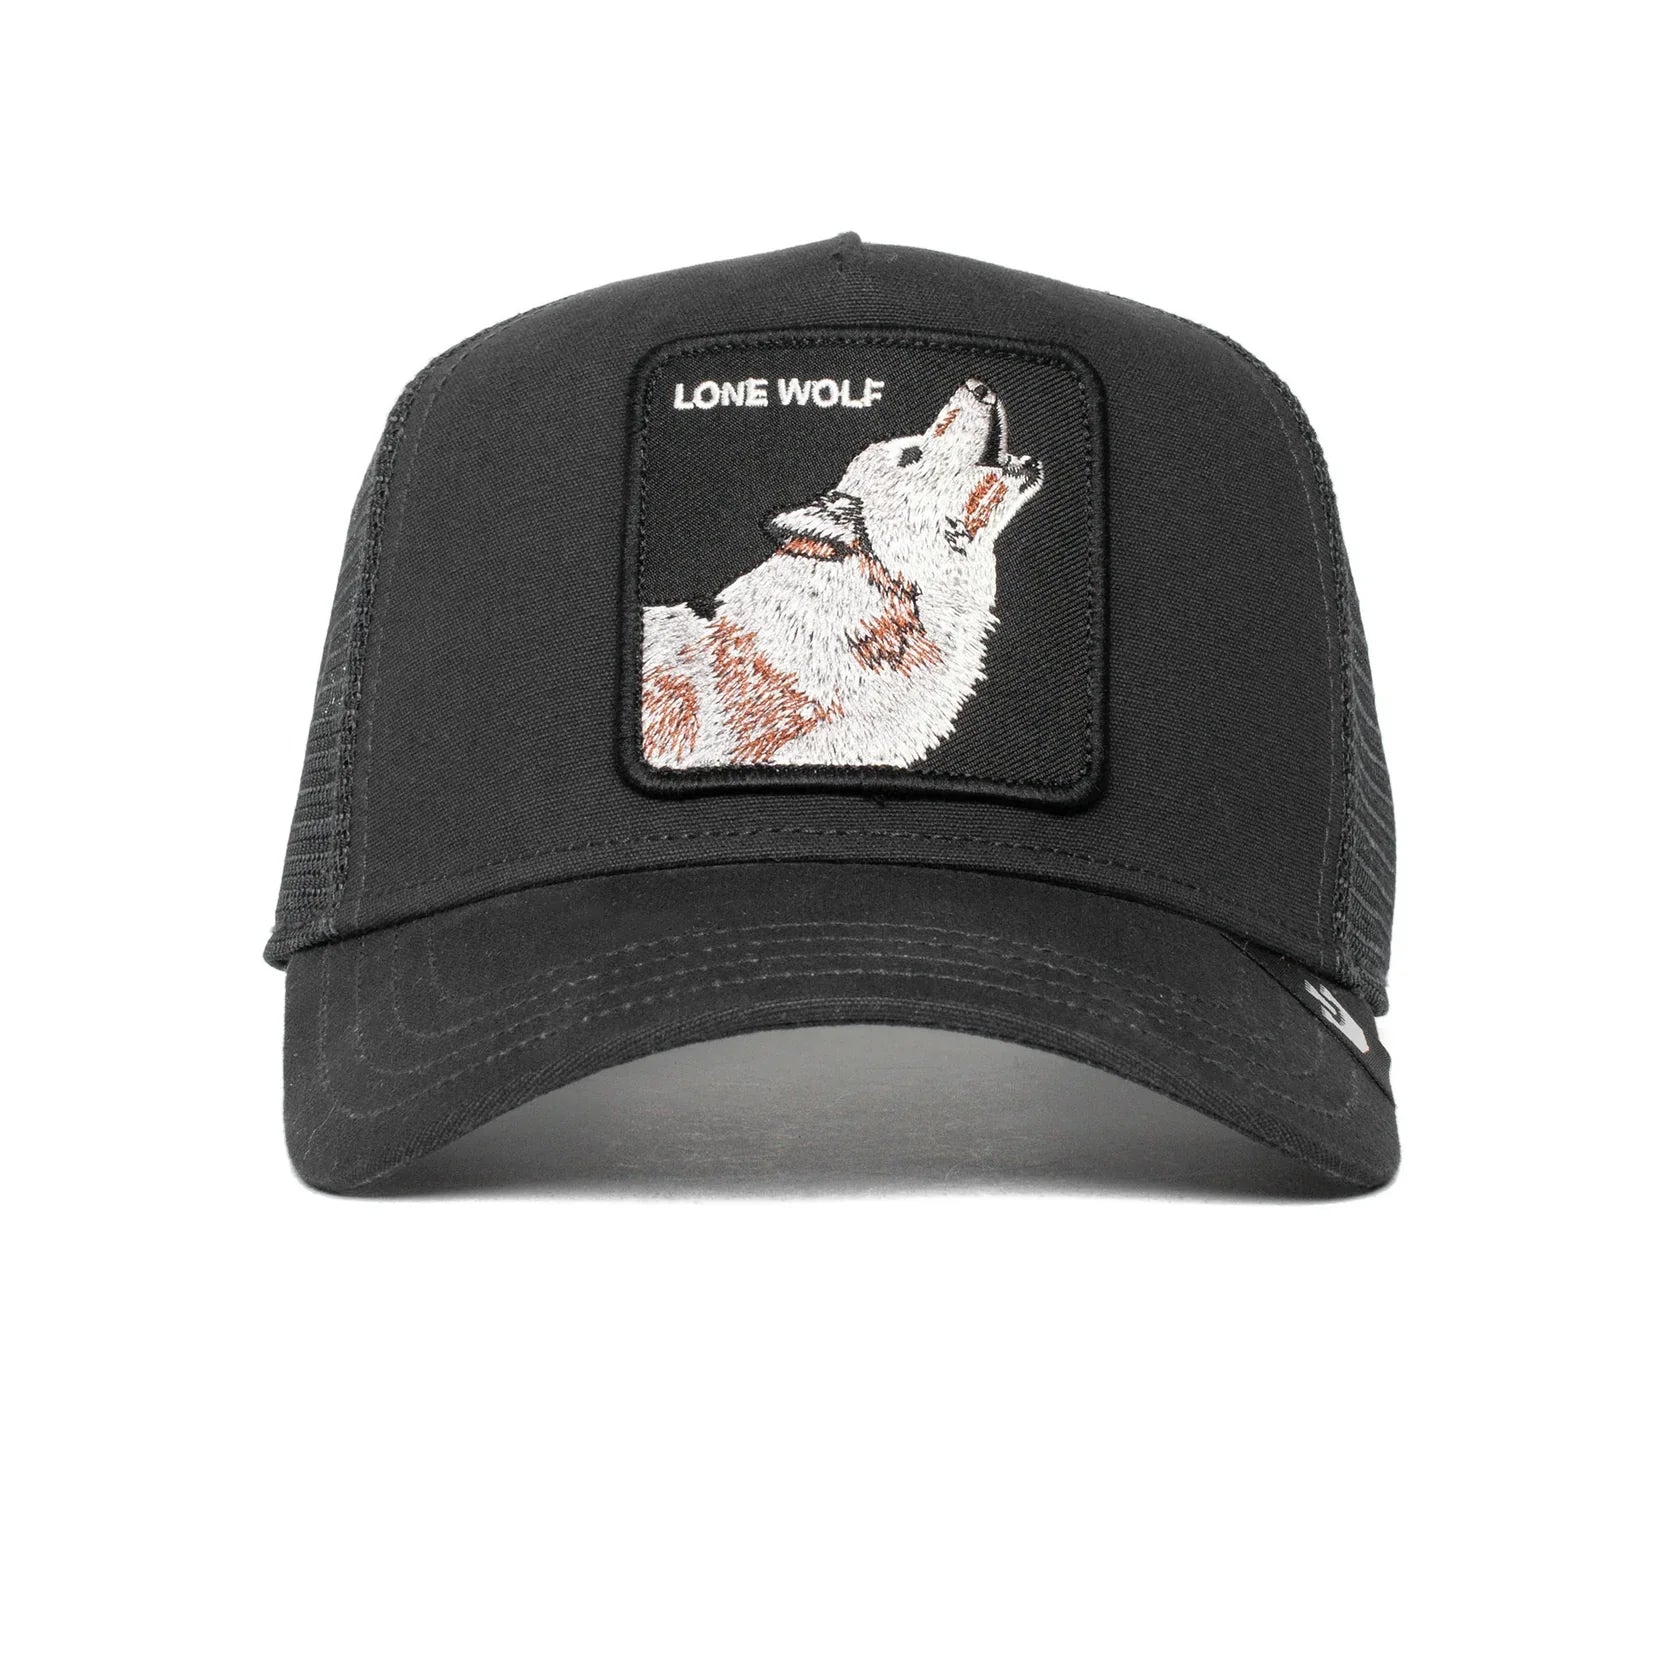 'Goorin Bros. The Lone Wolf Trucker Hat' in 'Black' colour